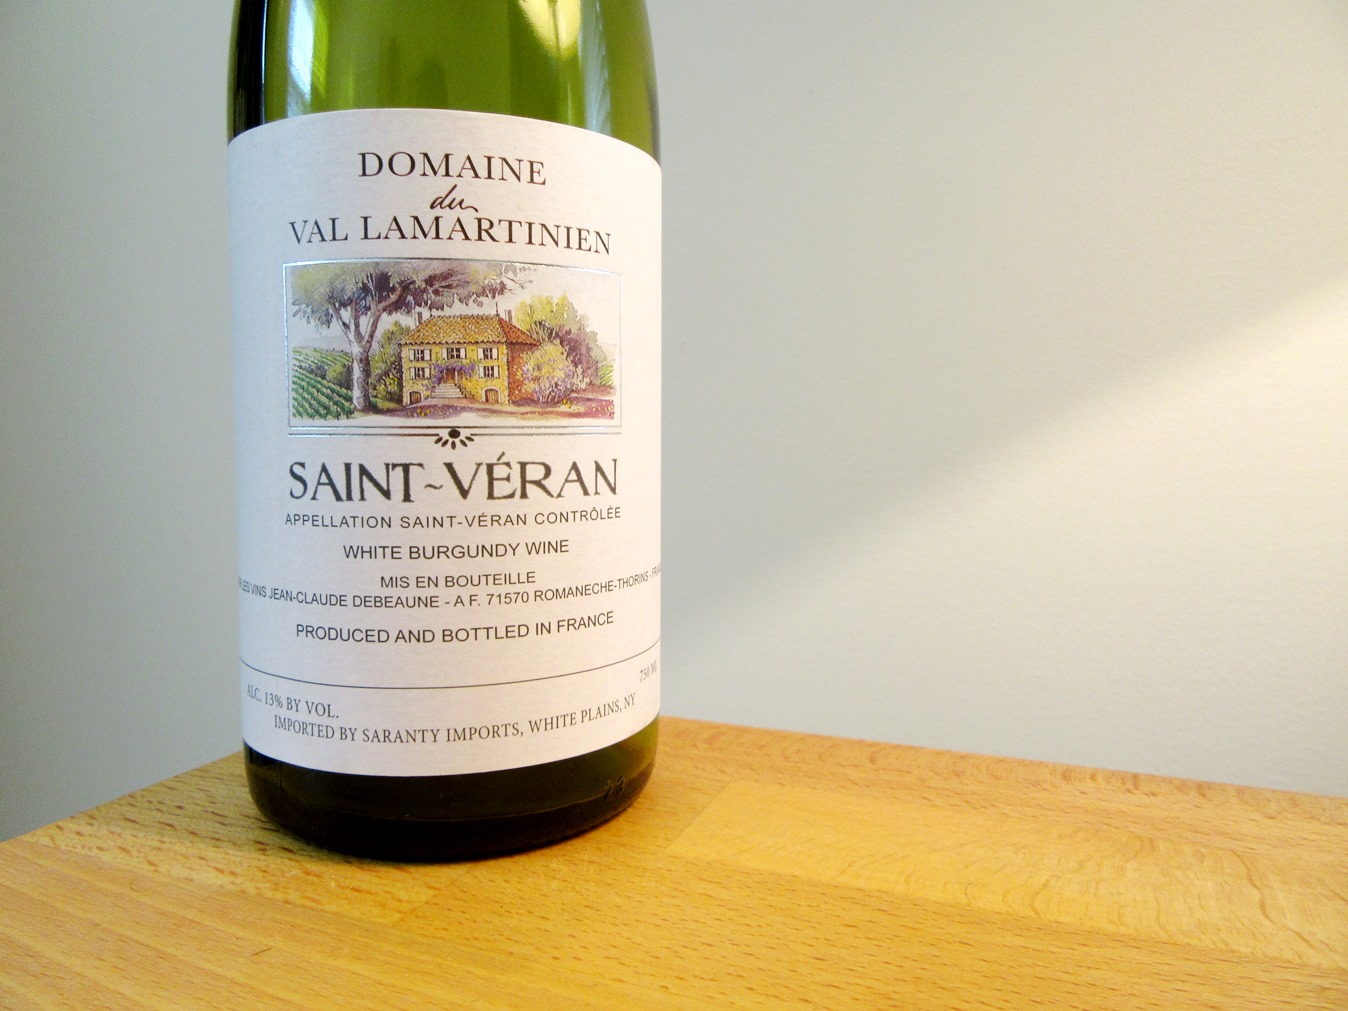 George DuBoeuf Domaine du Val Lamartinien, Saint-Veran 2012, Maconnais, France, Wine Casual